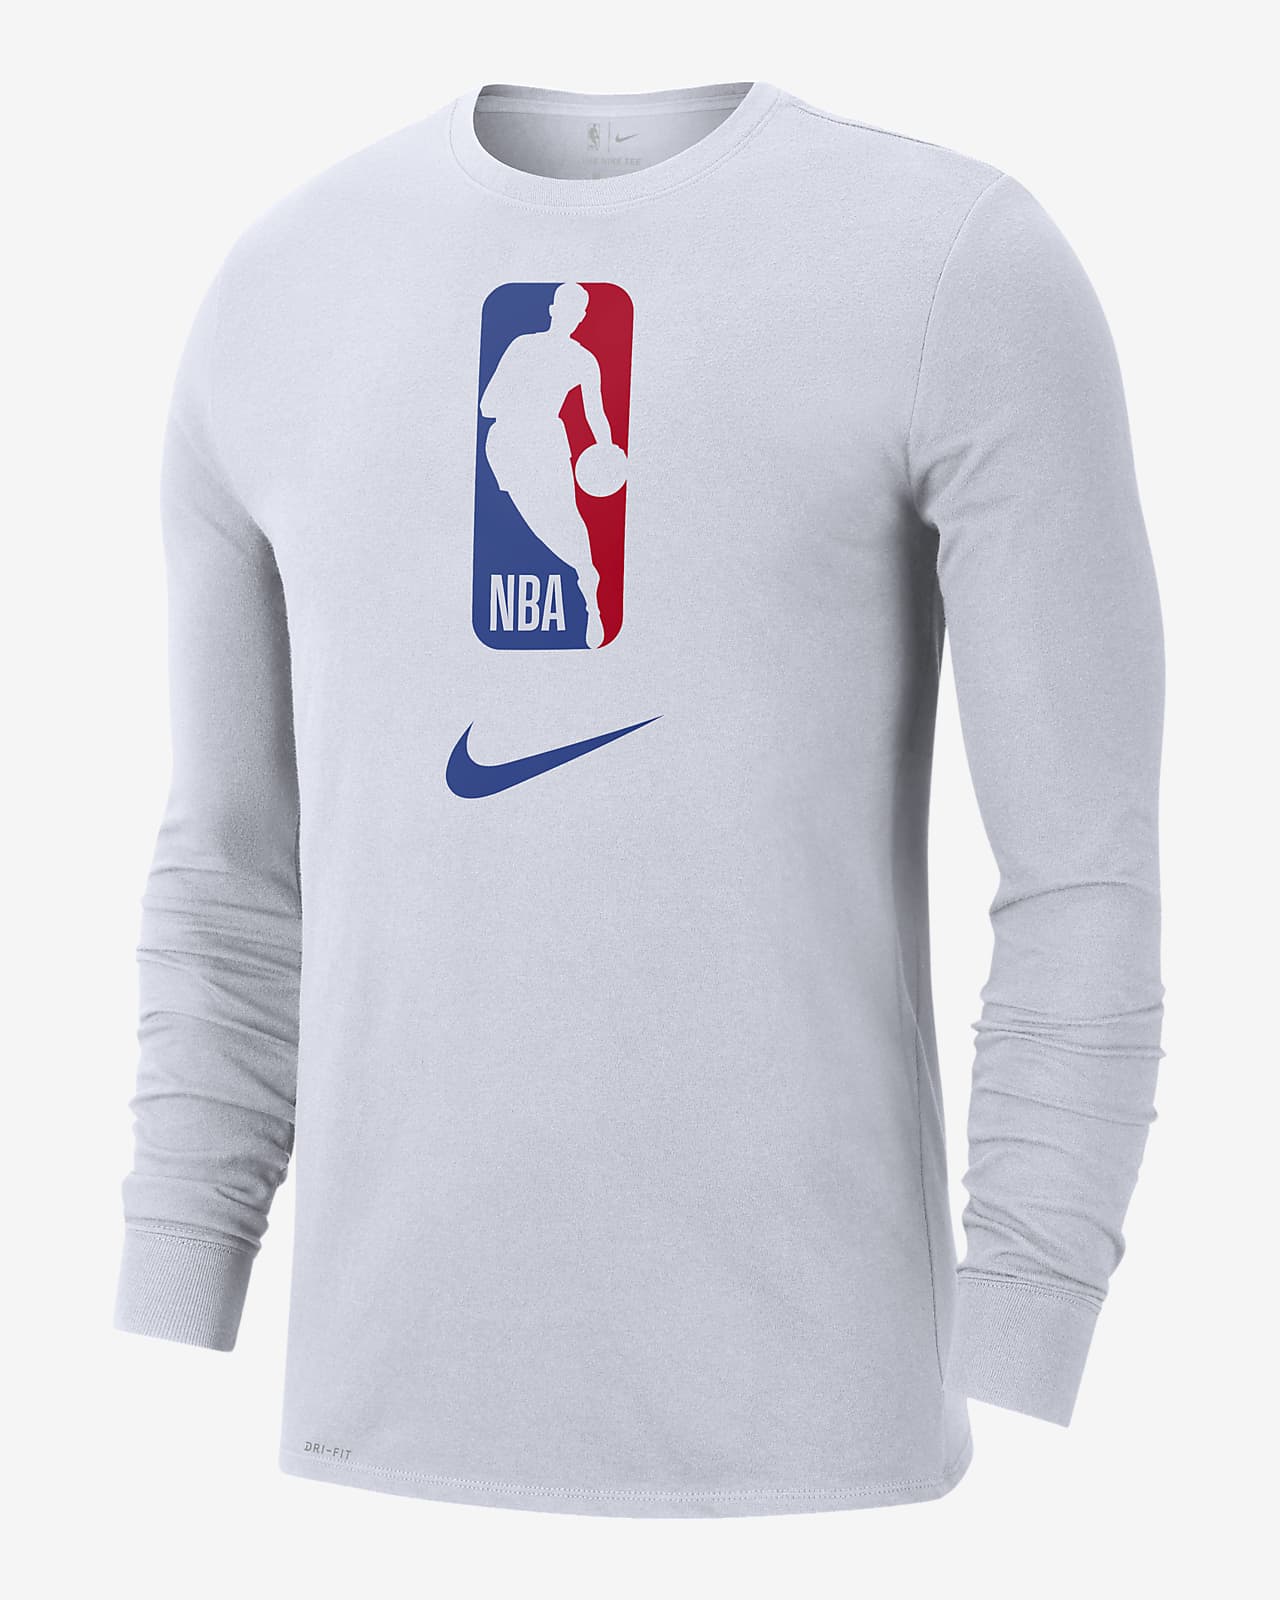 Team 31 Men's Nike Dri-FIT NBA T-Shirt 